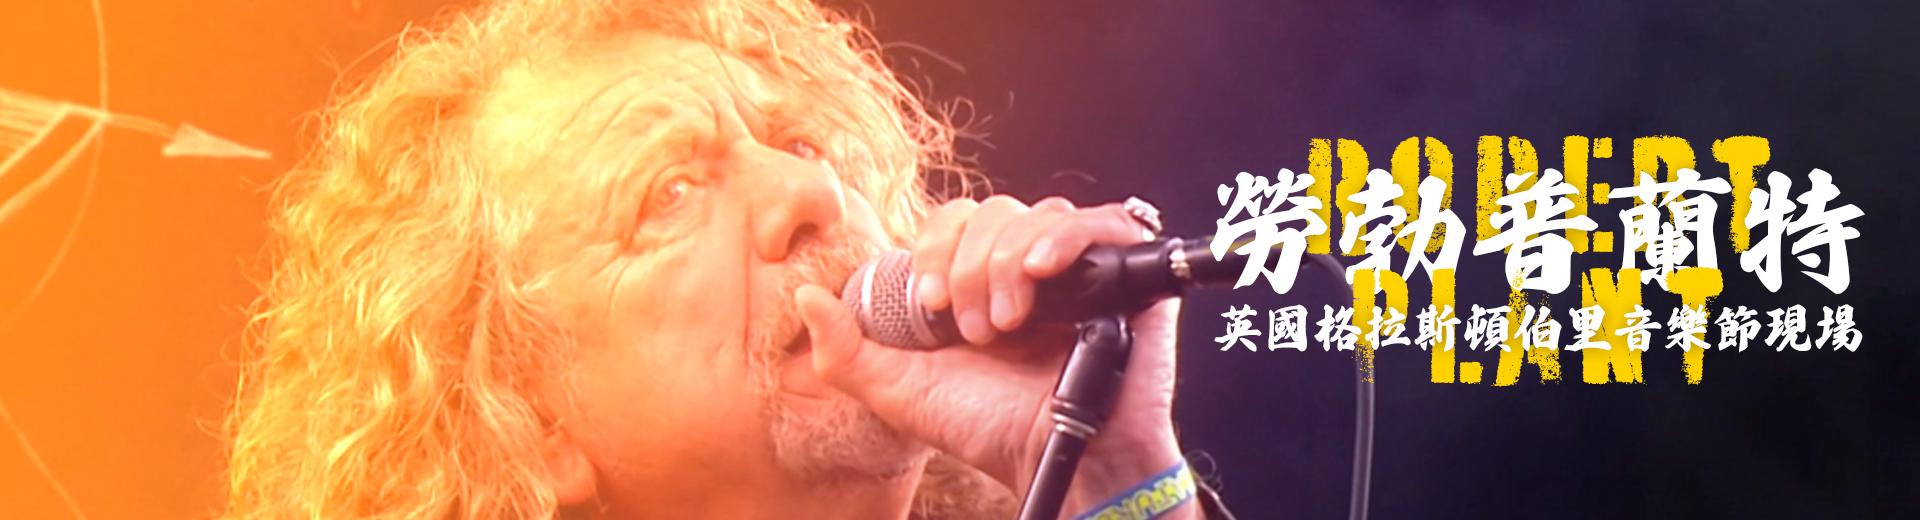 勞勃普蘭特—英國格拉斯頓伯里音樂節現場 Robert Plant - Live at Glastonbury